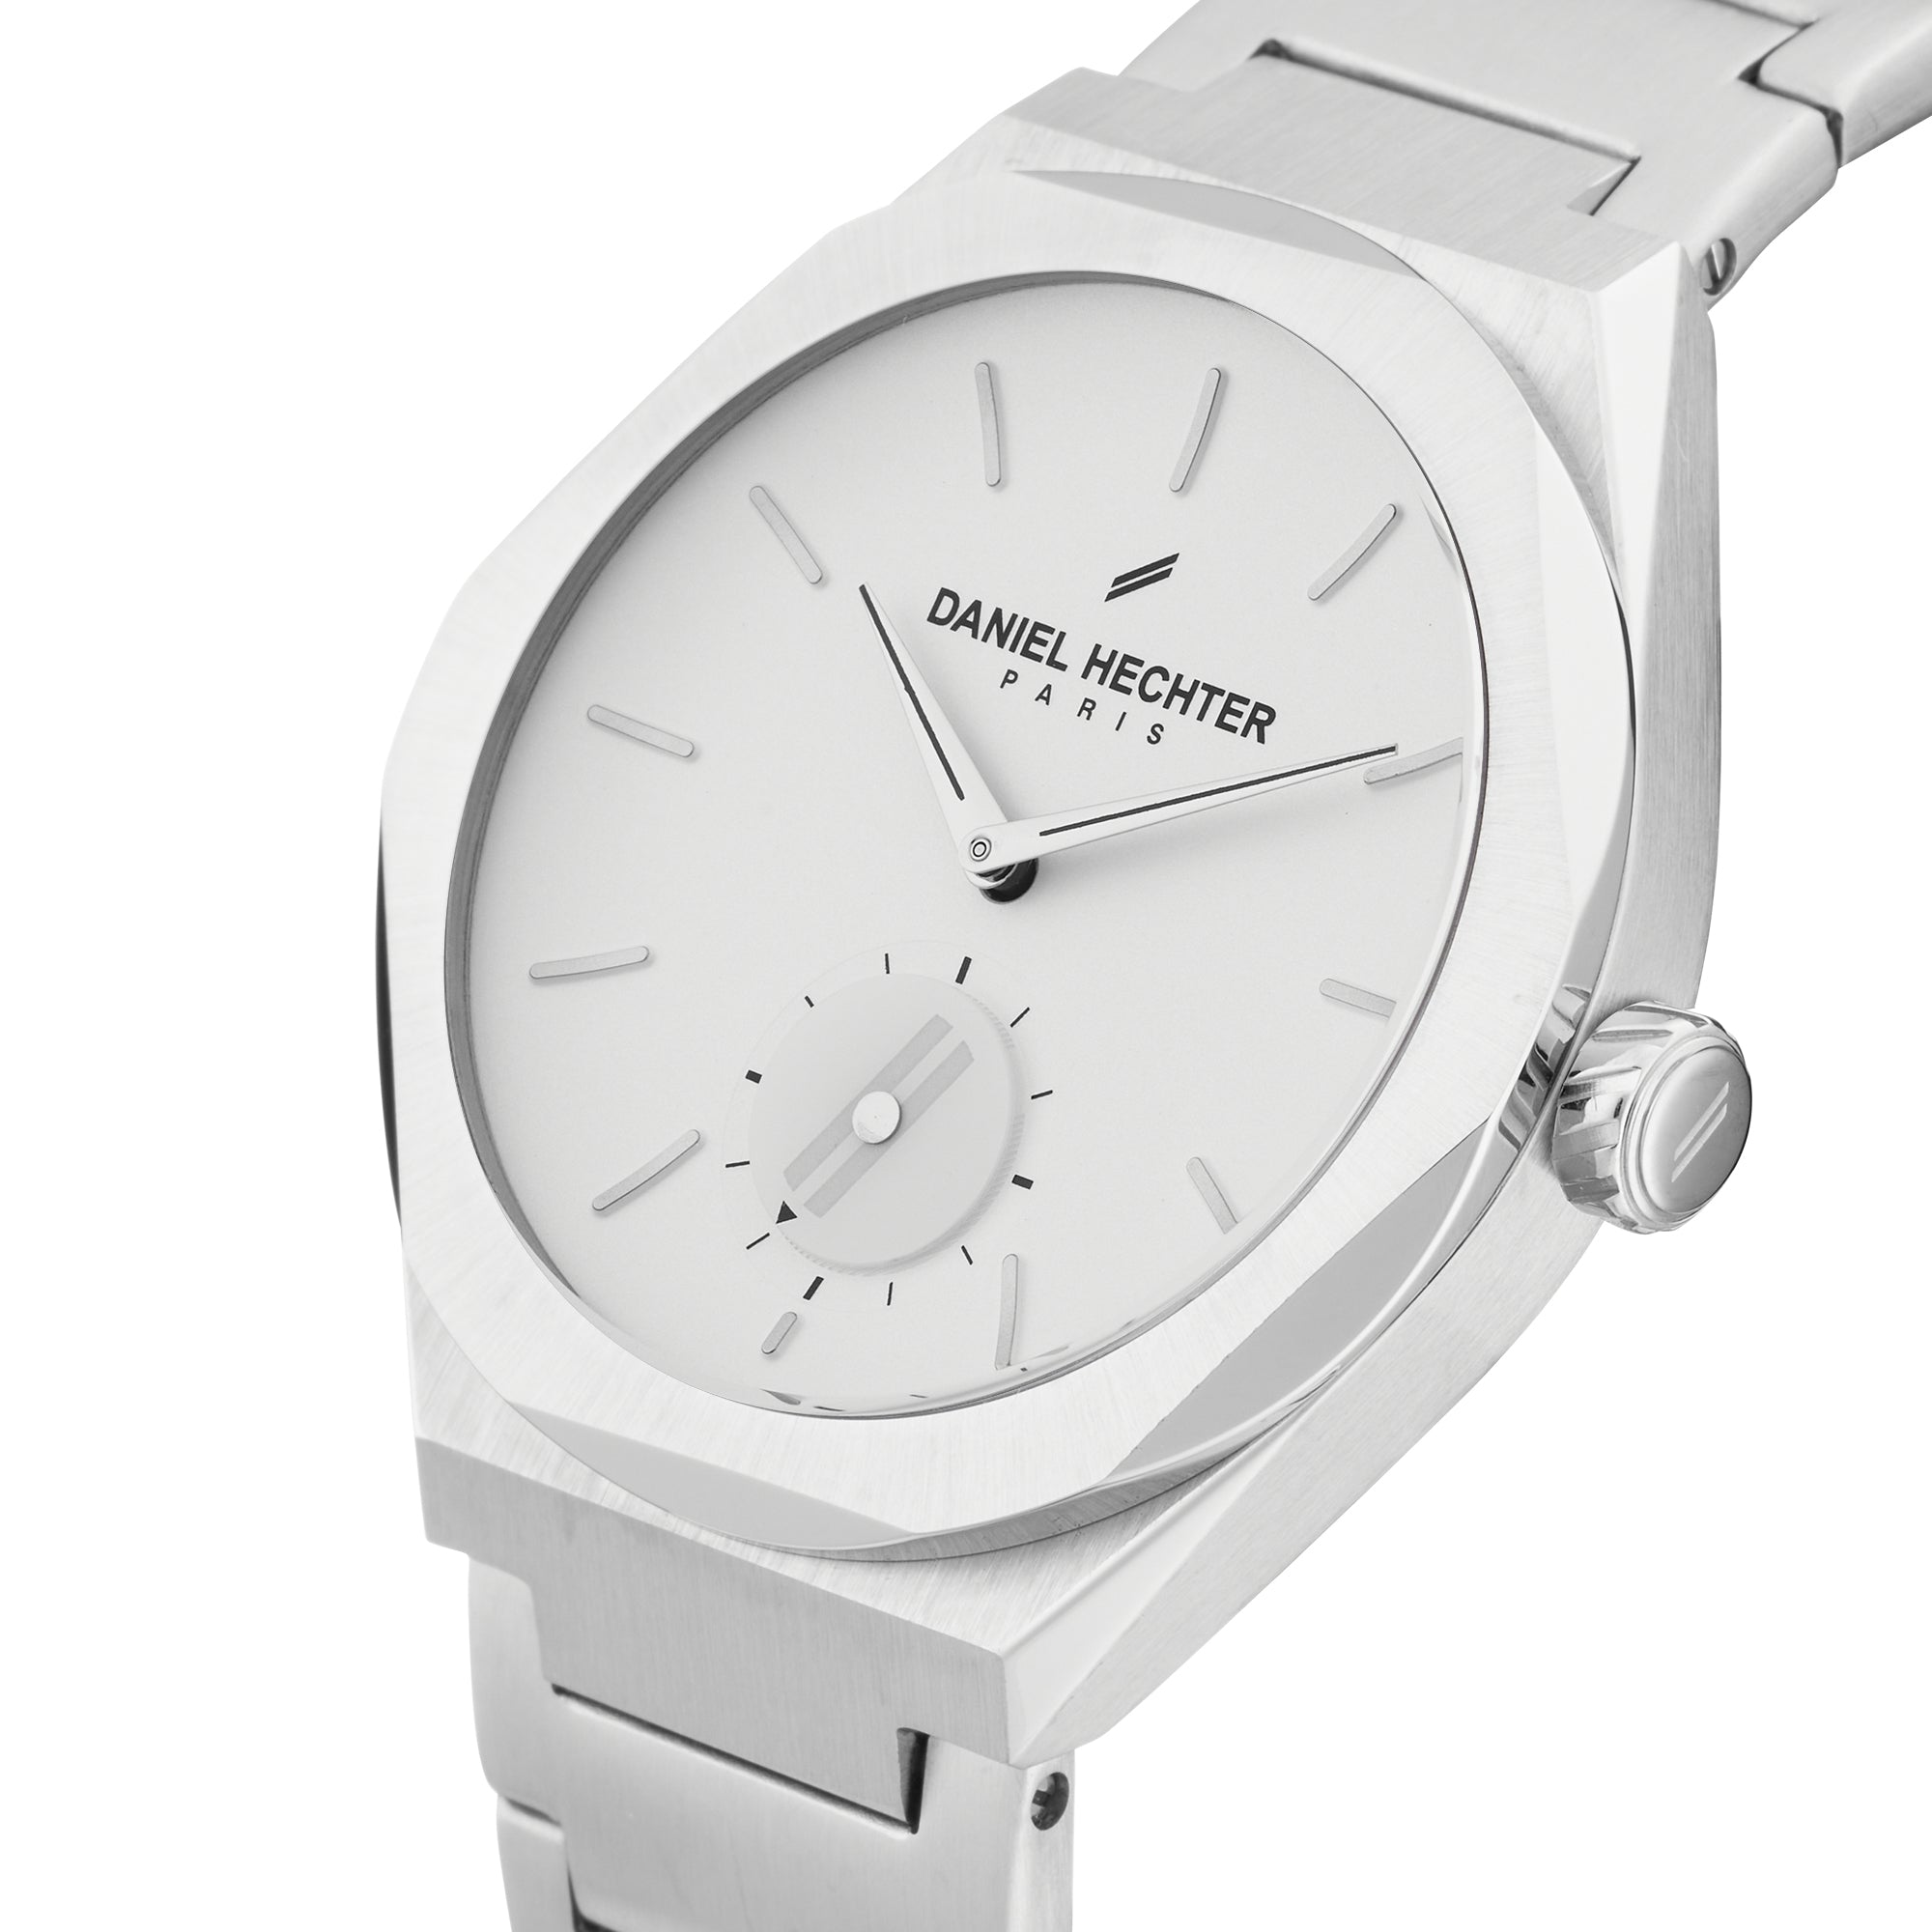 Buy Daniel Hechter Fusion Man Silver White Watch Online